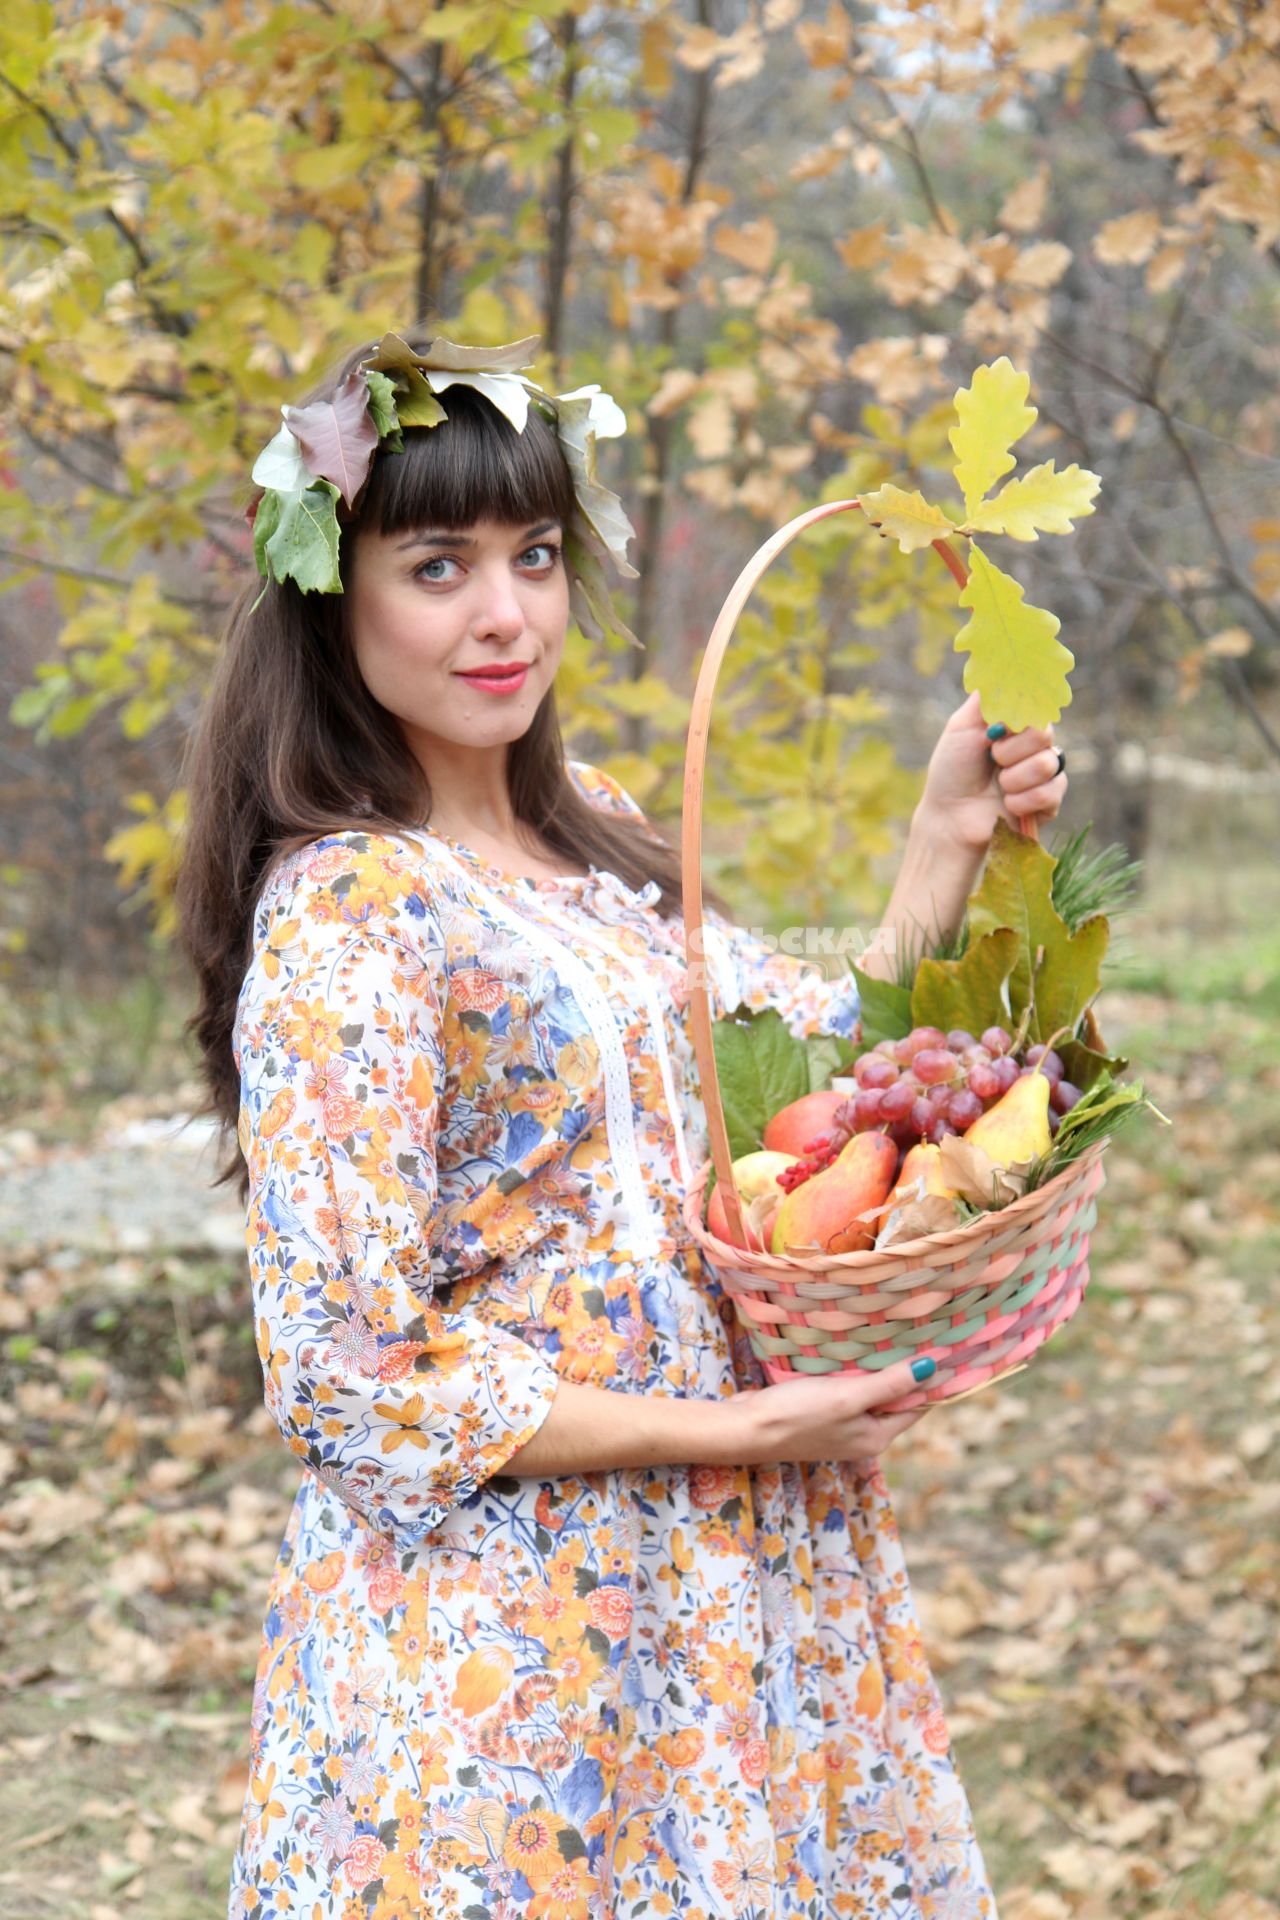 Иркутск. Девушка с корзиной на фоне осеннего леса.